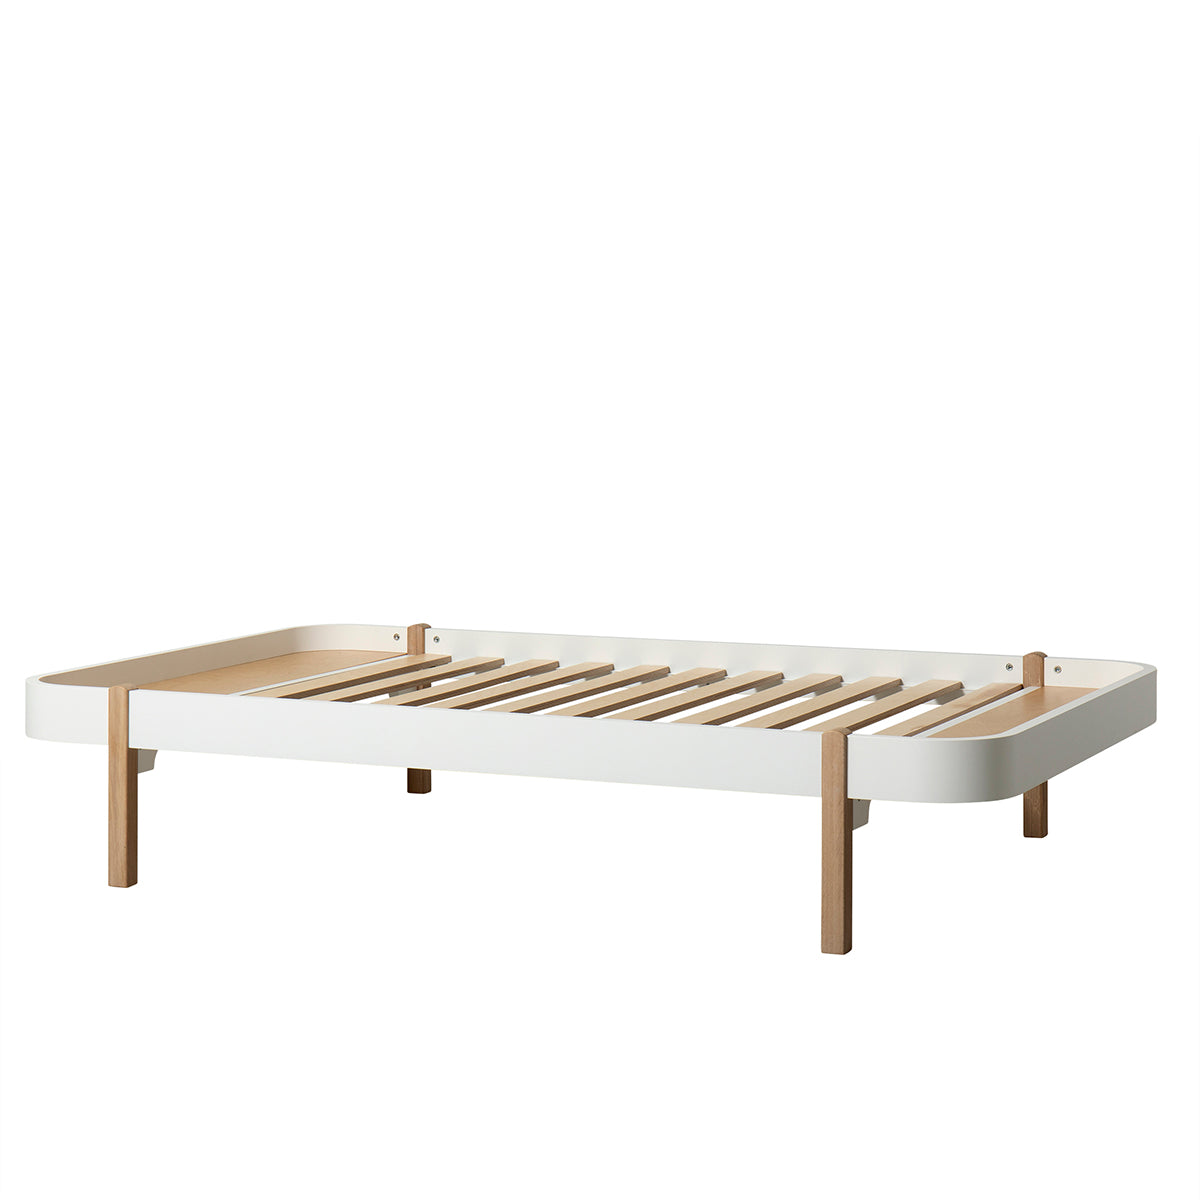 Oliver Furniture Wood Lounger, 120 x 200 cm, white/oak